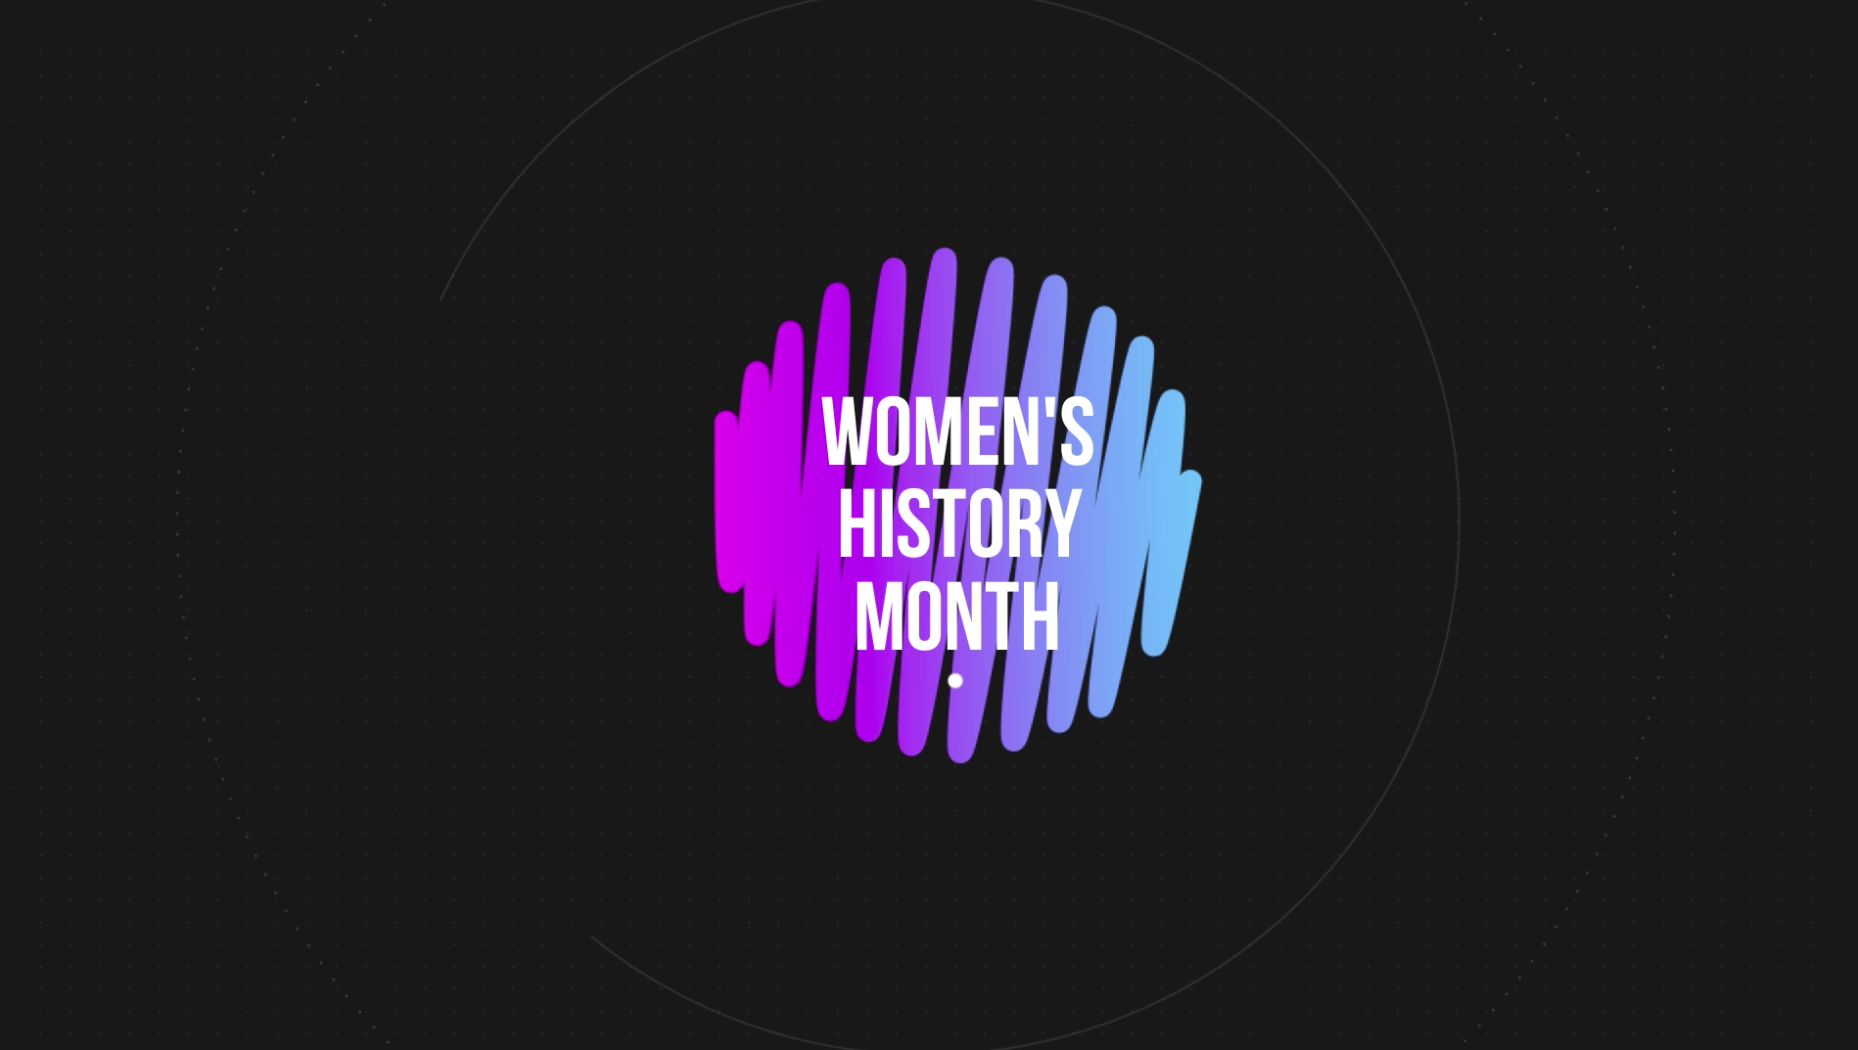 Women's History Month 2018